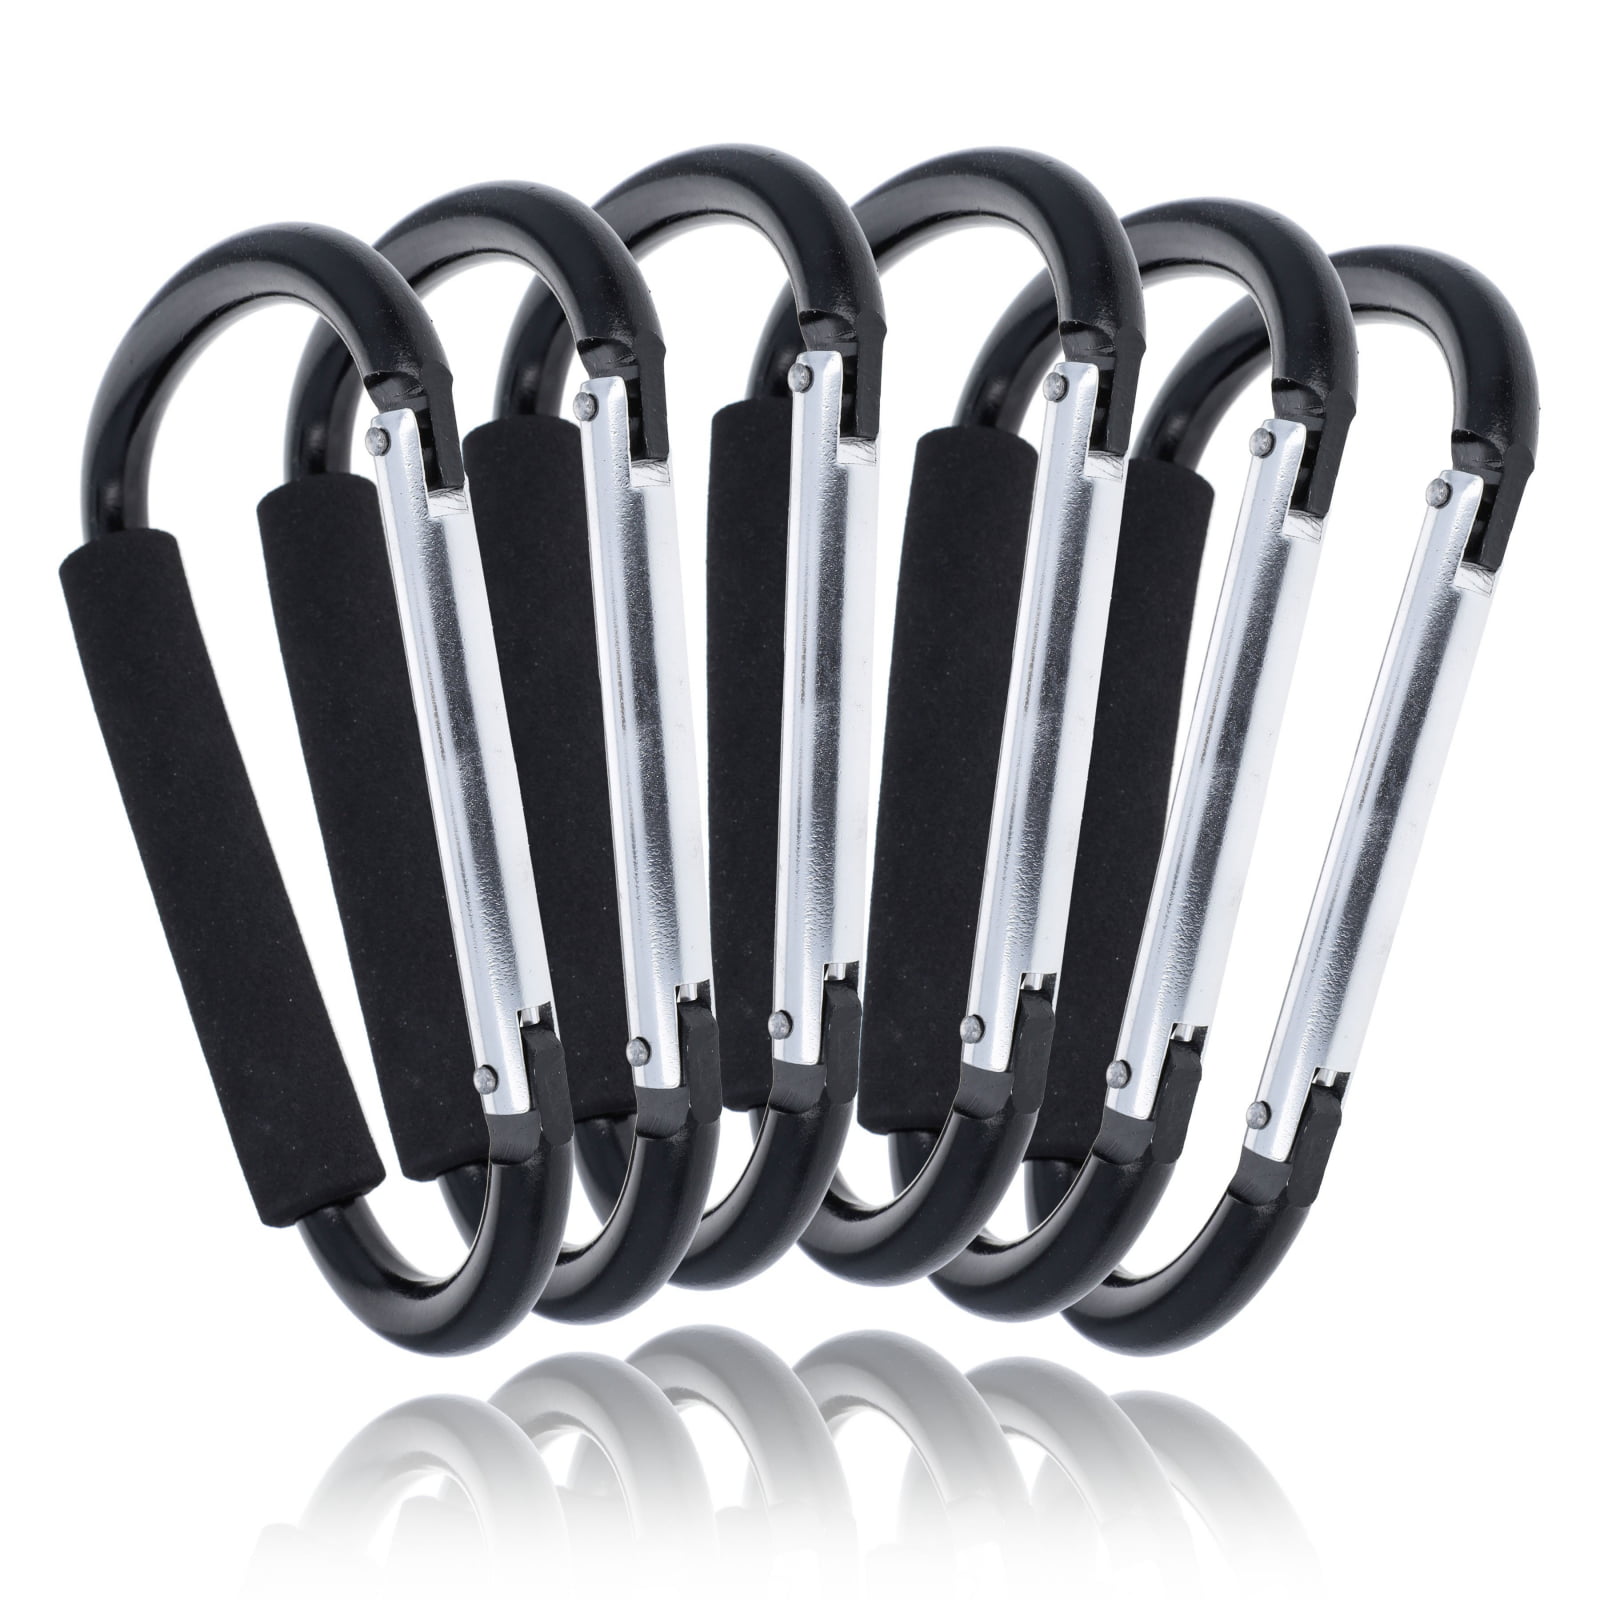 5 x Lightweight Aluminium Quick Release Key Rings Spring Clip Carabiner 